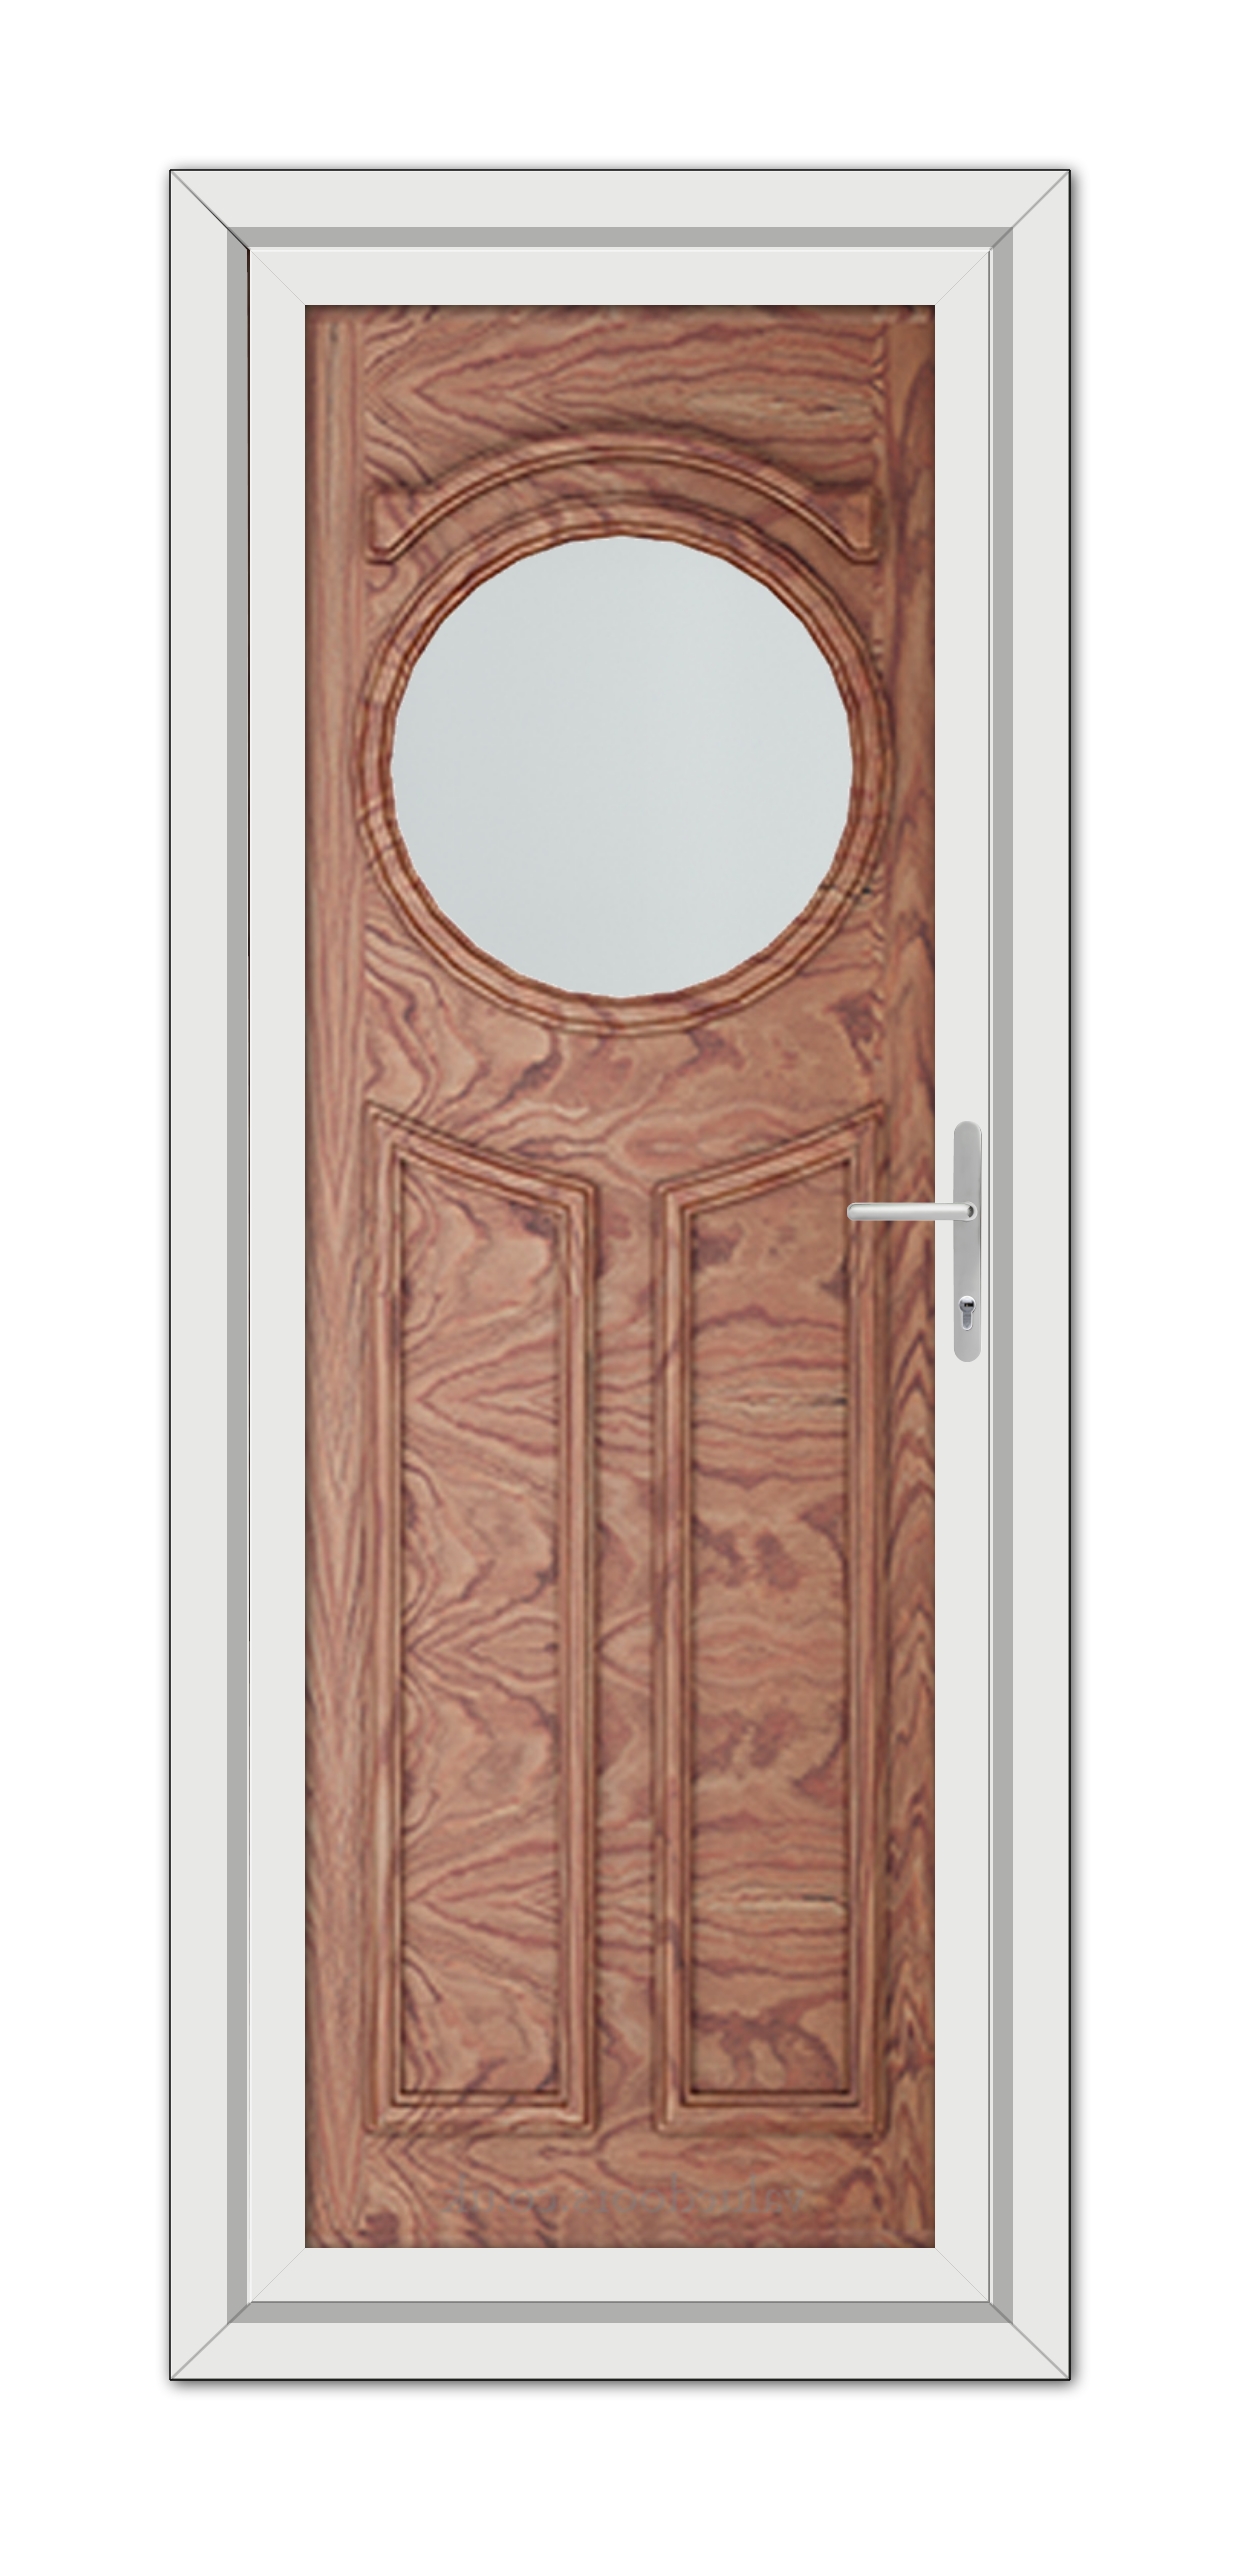 A close-up of a Solid Oak Blenheim uPVC Door.